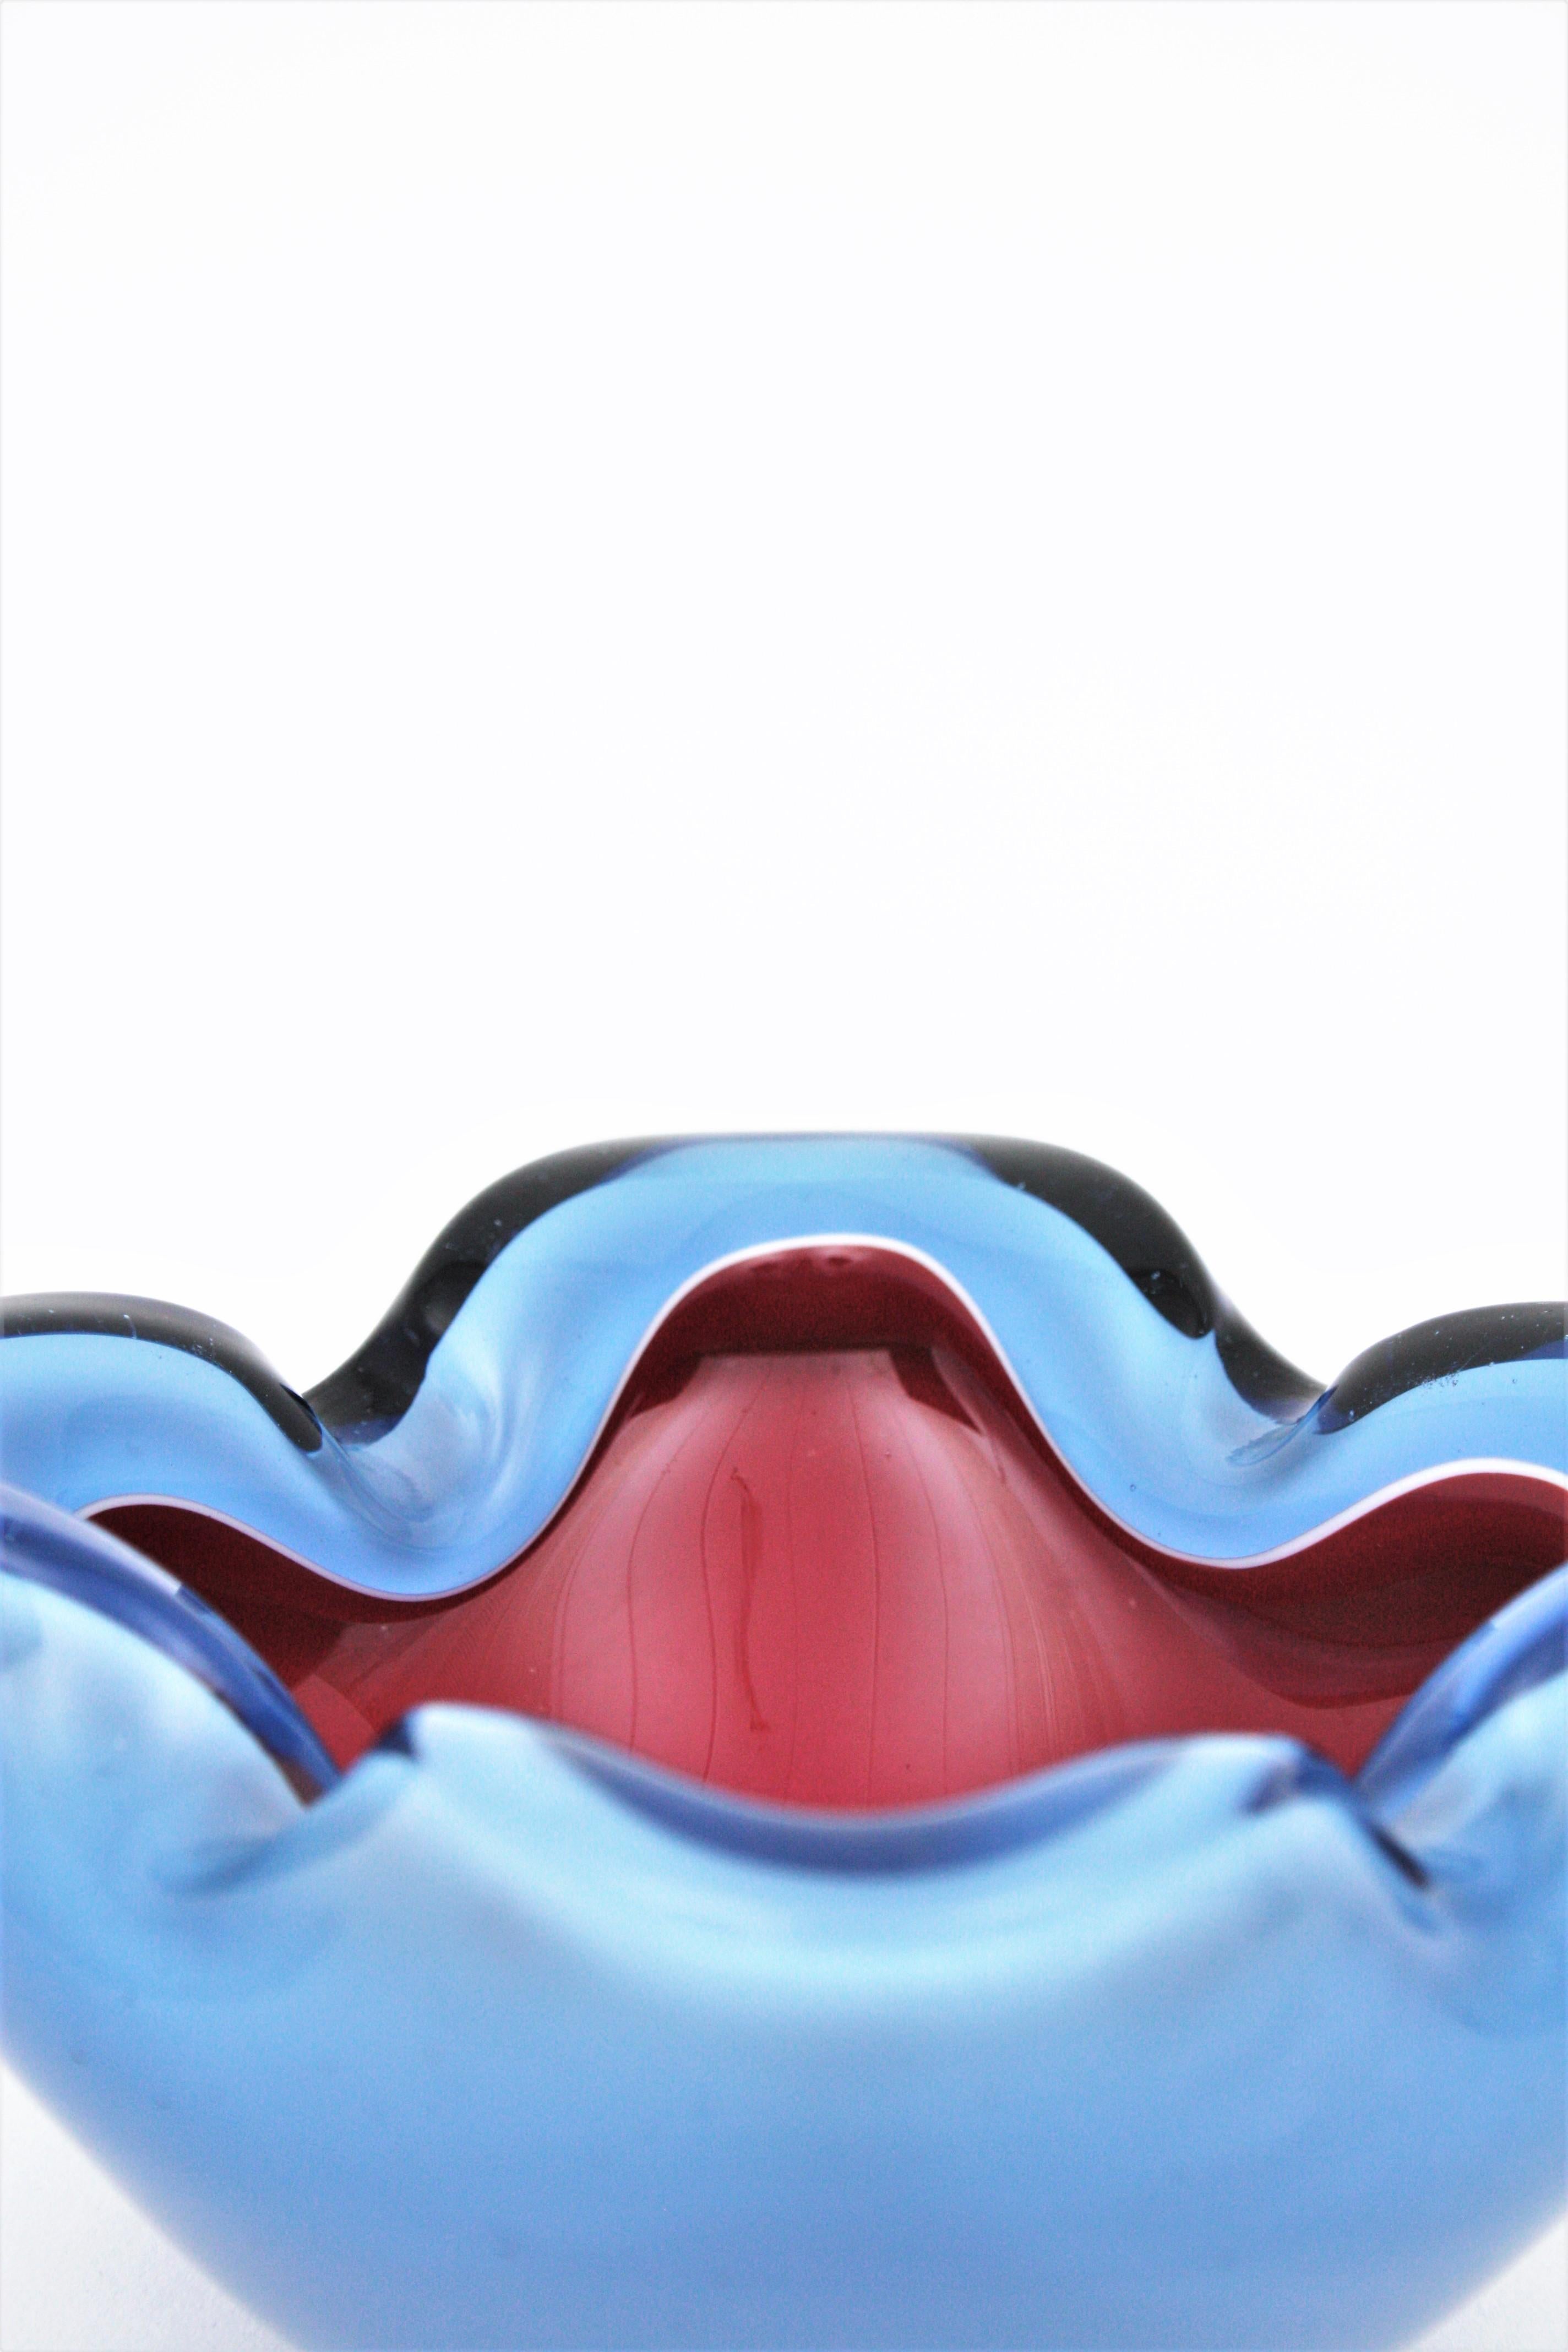 Seguso Murano Sommerso Red Blue Italian Art Glass Bowl / Ashtray For Sale 6